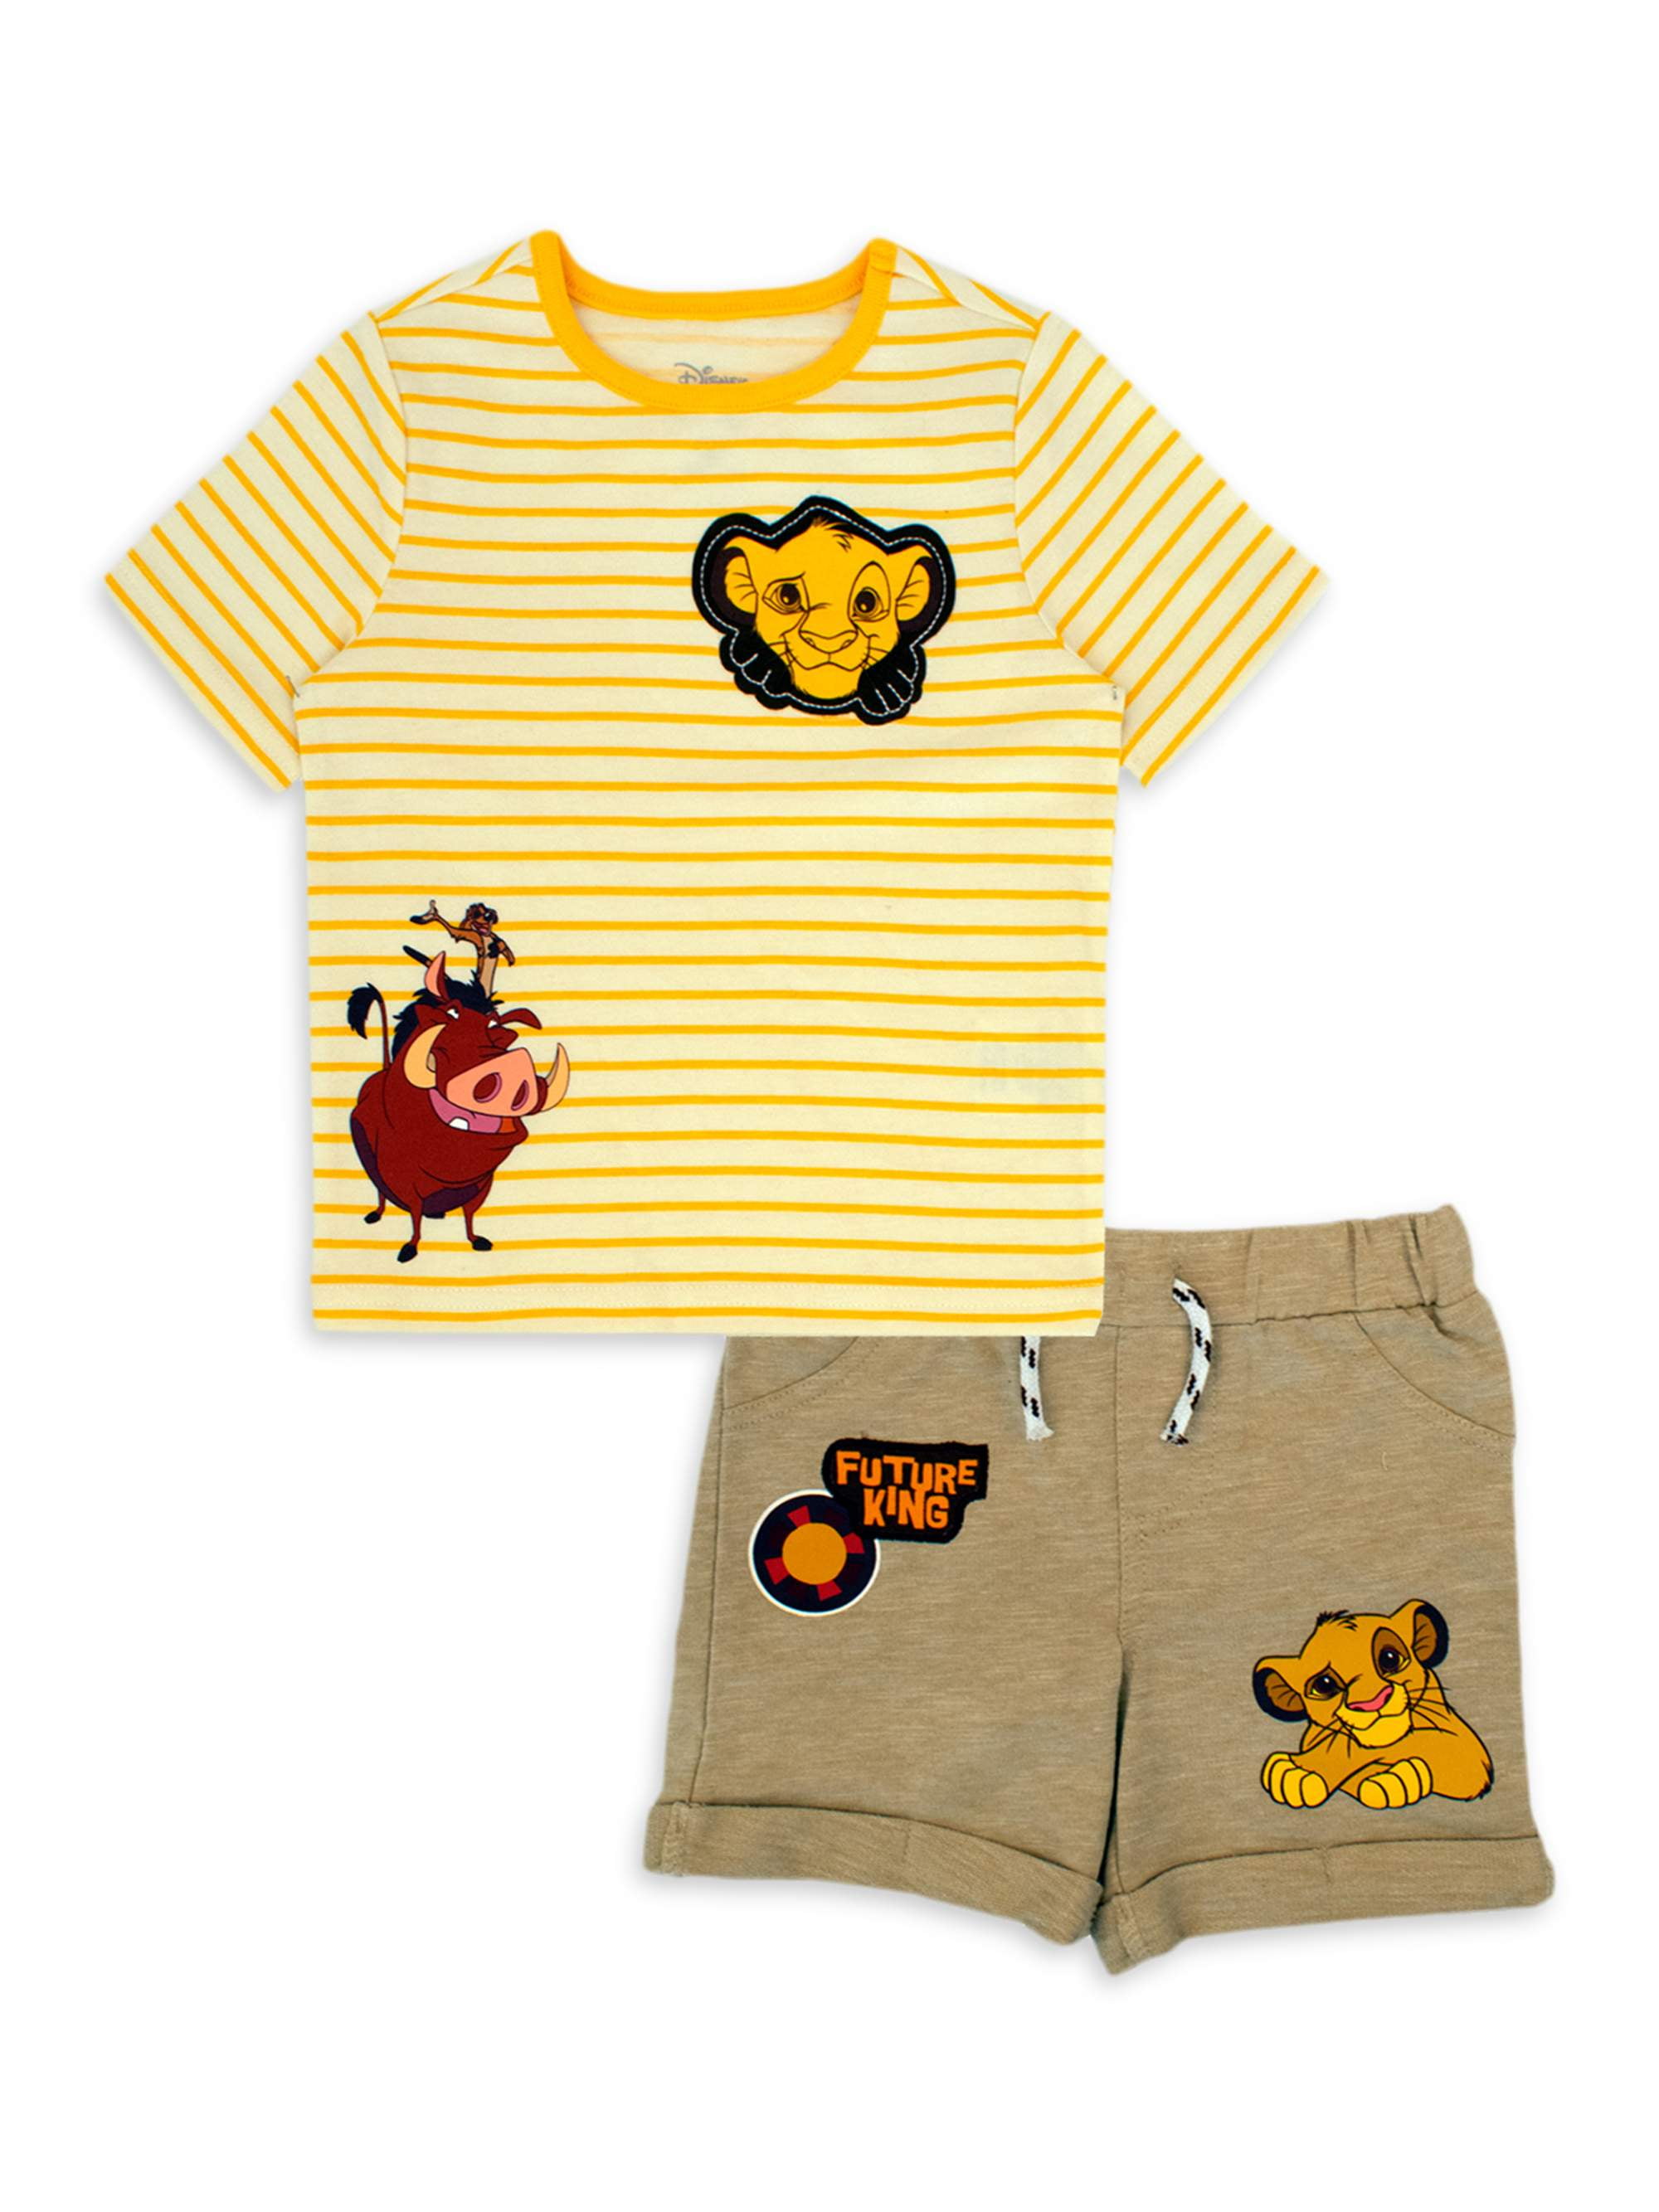 Star Wars Disney Toddler T-Shirt Shorts Set 2pc Outfit